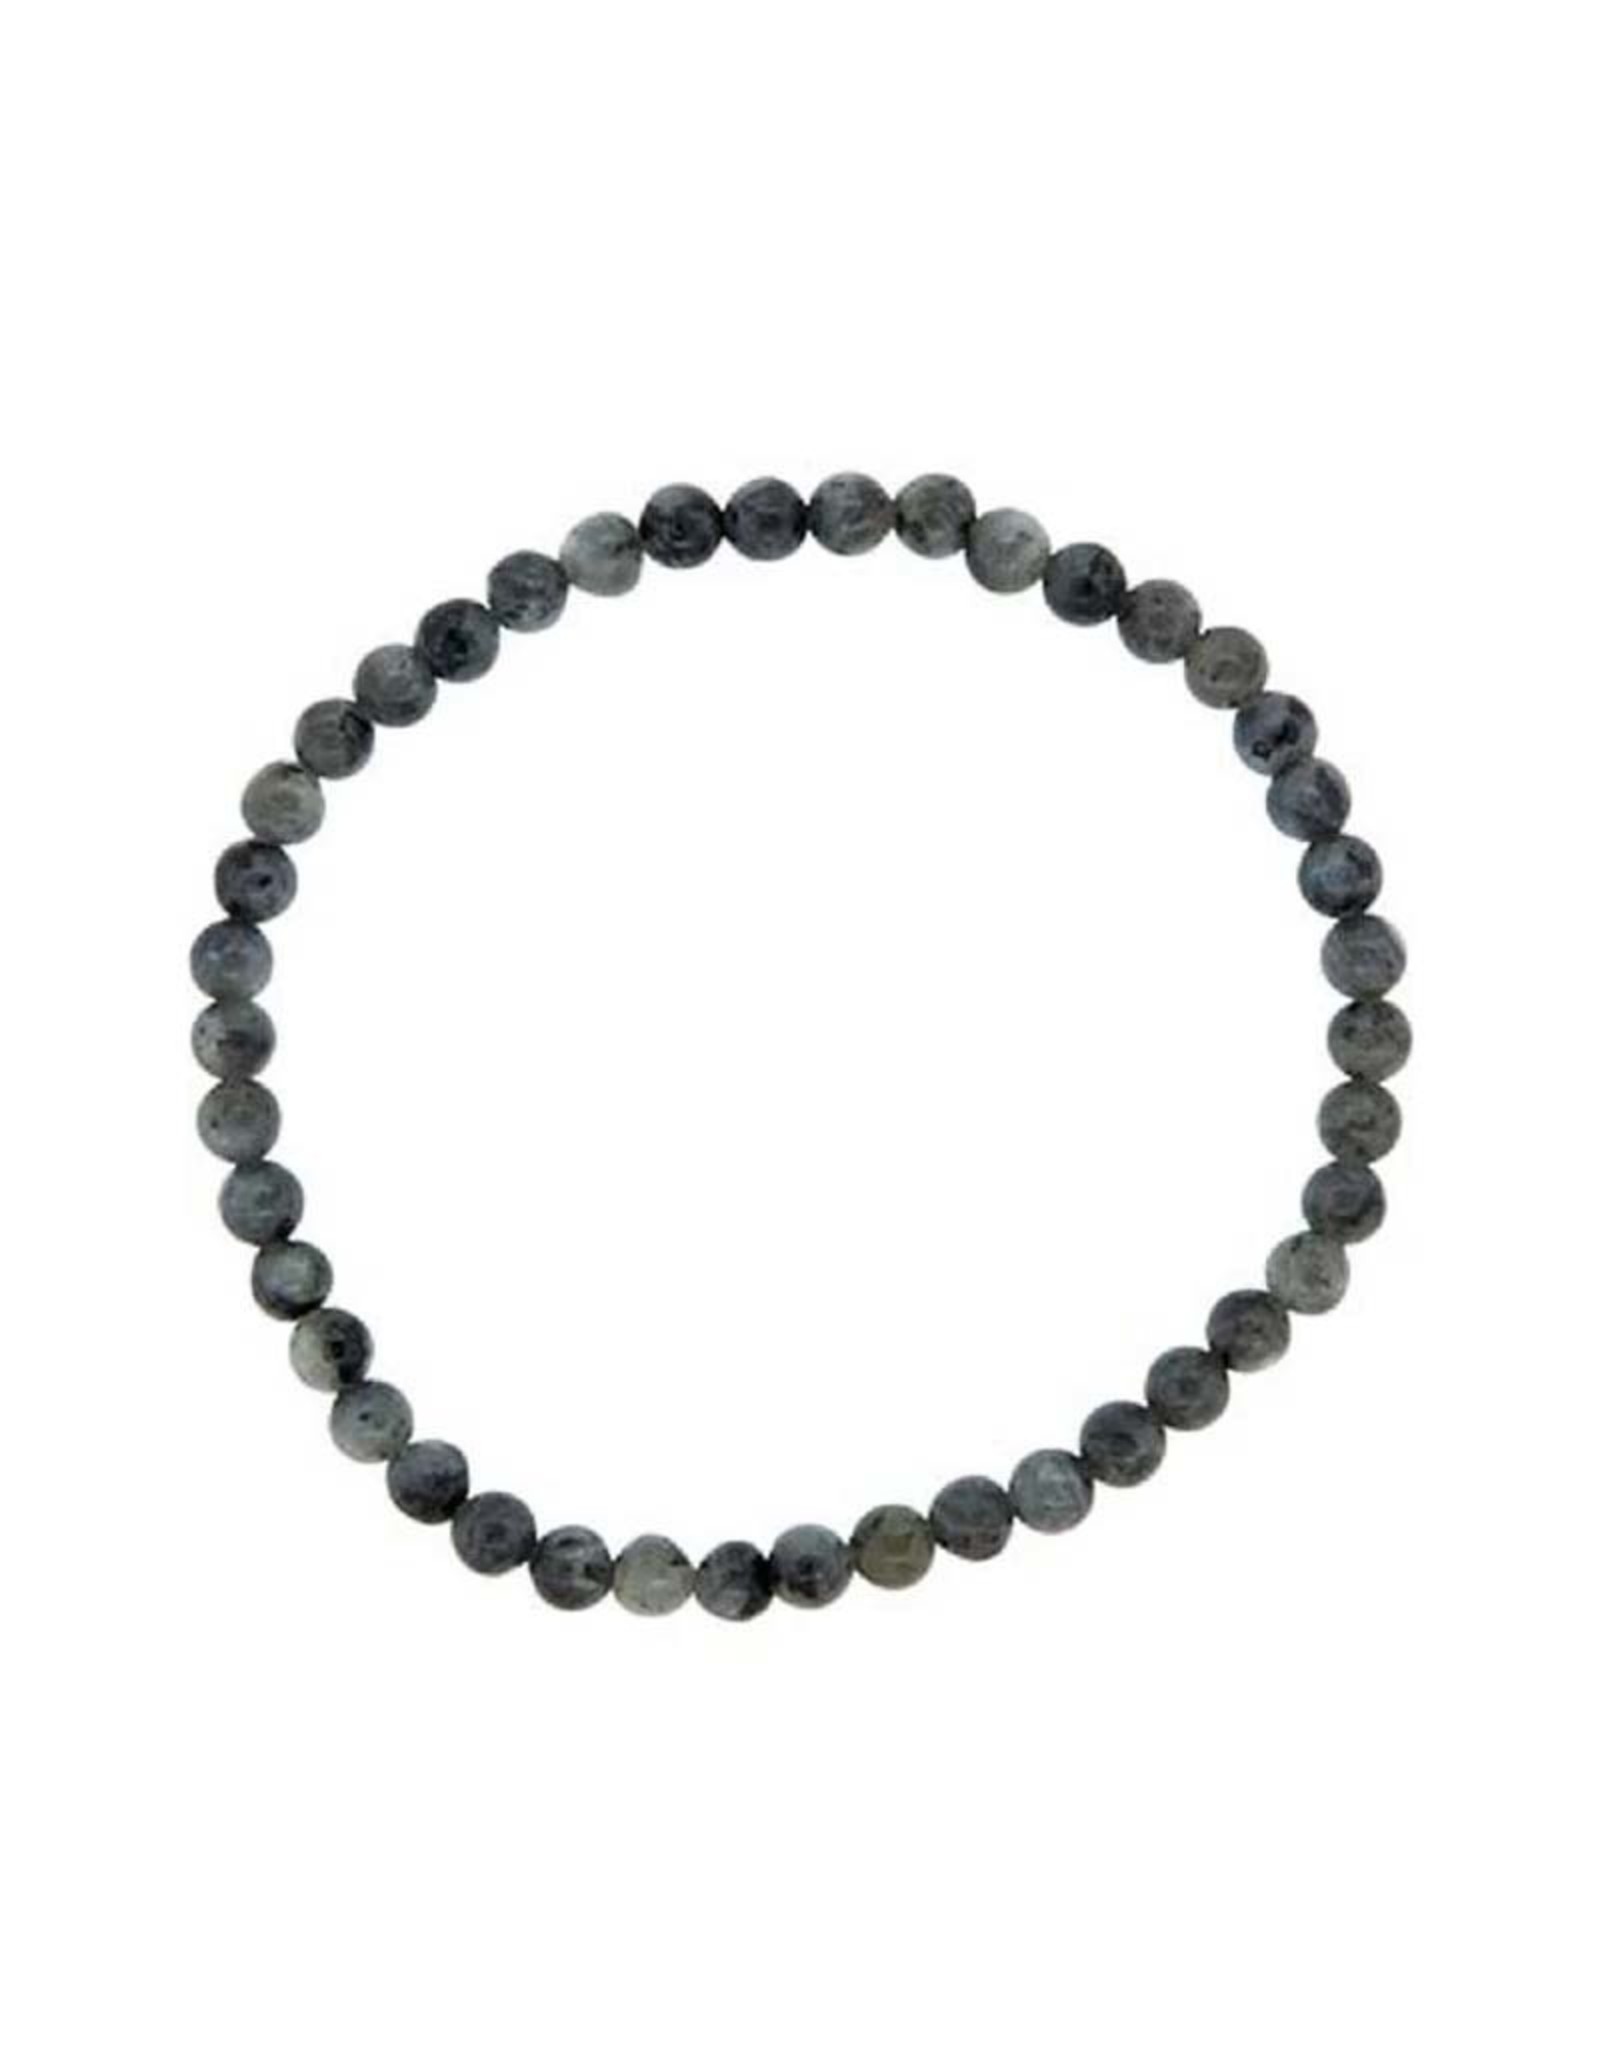 Black Labradorite 4MM  Bracelet